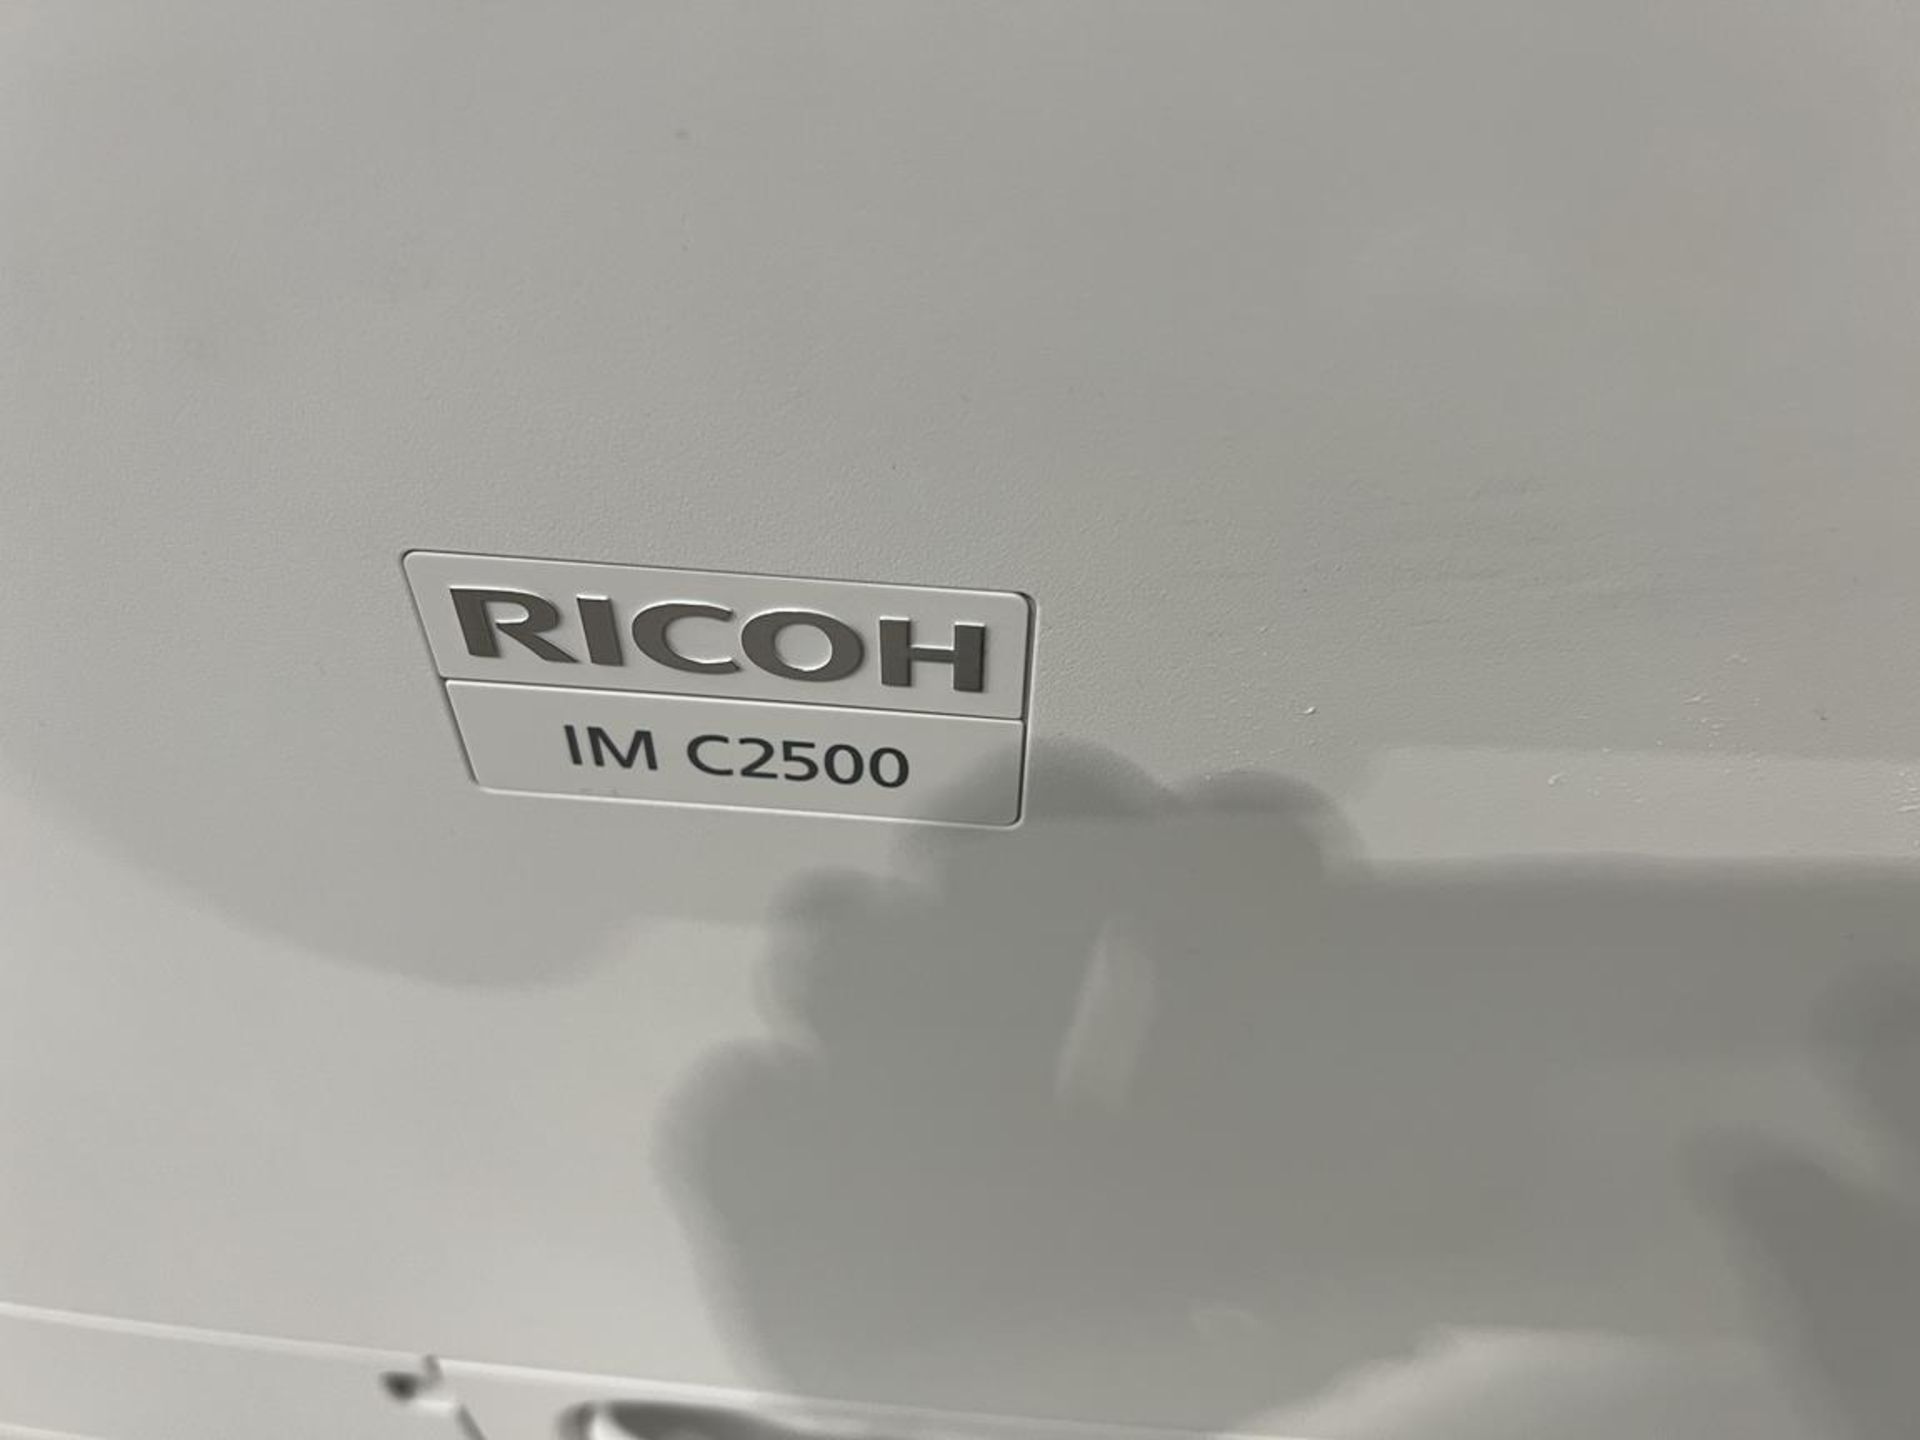 Rioch IM C2500 printer photocopier - Image 4 of 5